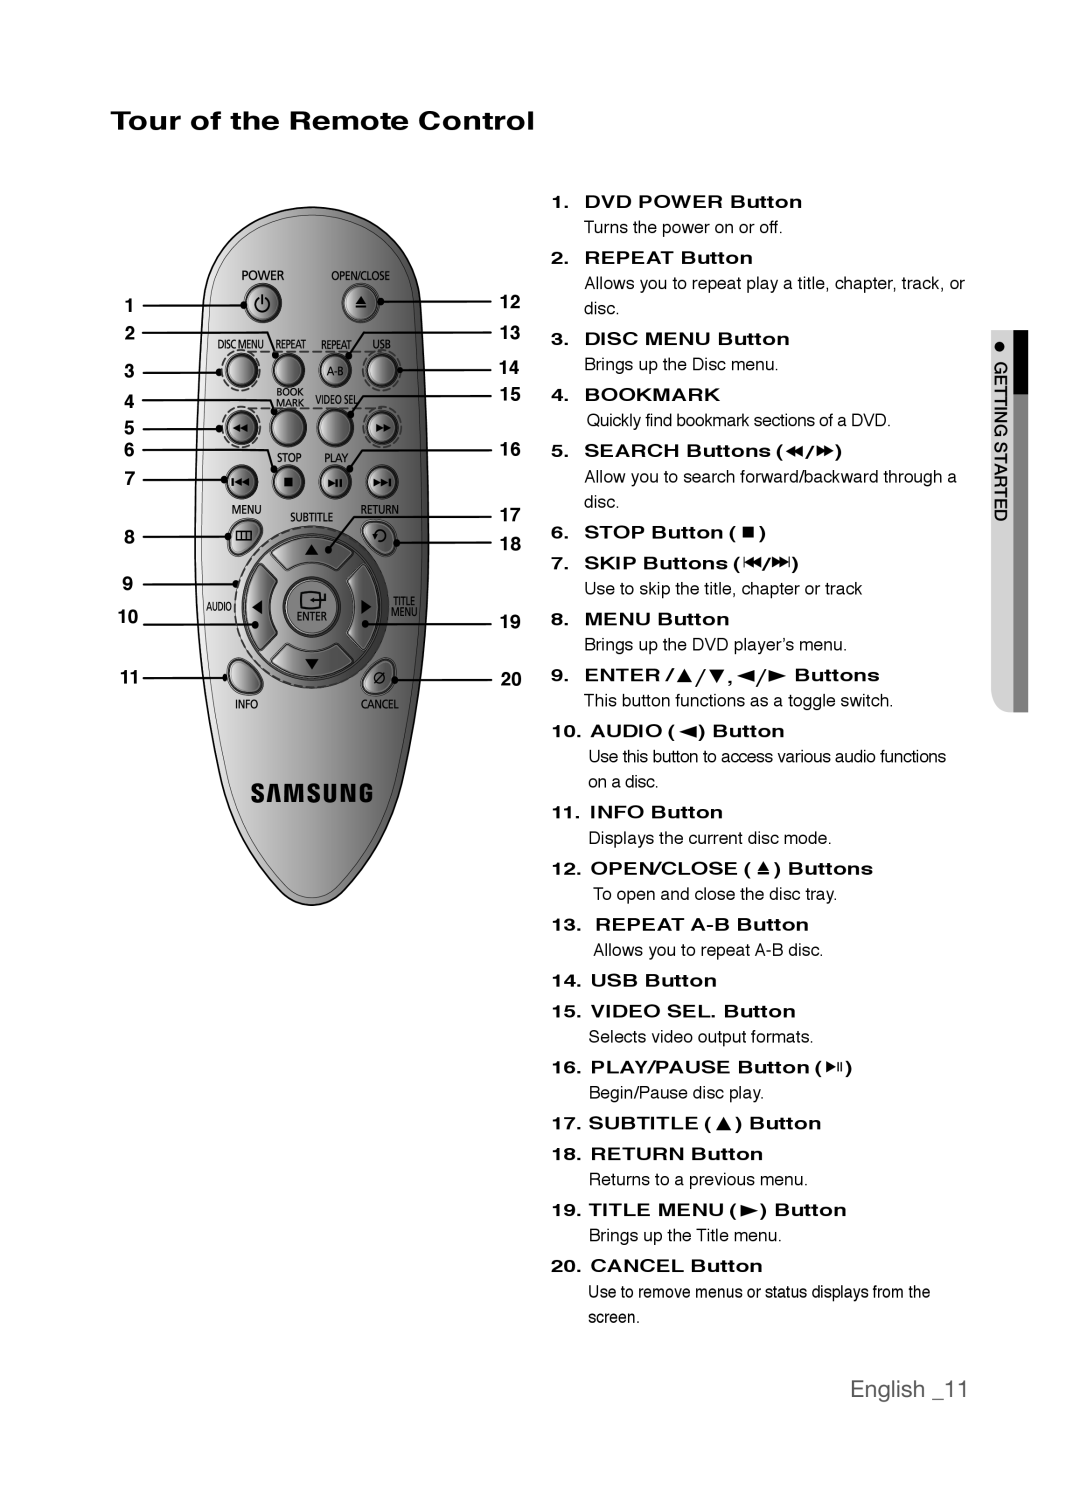 Samsung AK68-01770G Tour of the Remote Control, English, MENU Button, Brings up the DVD player’s menu, AUDIO √ Button 